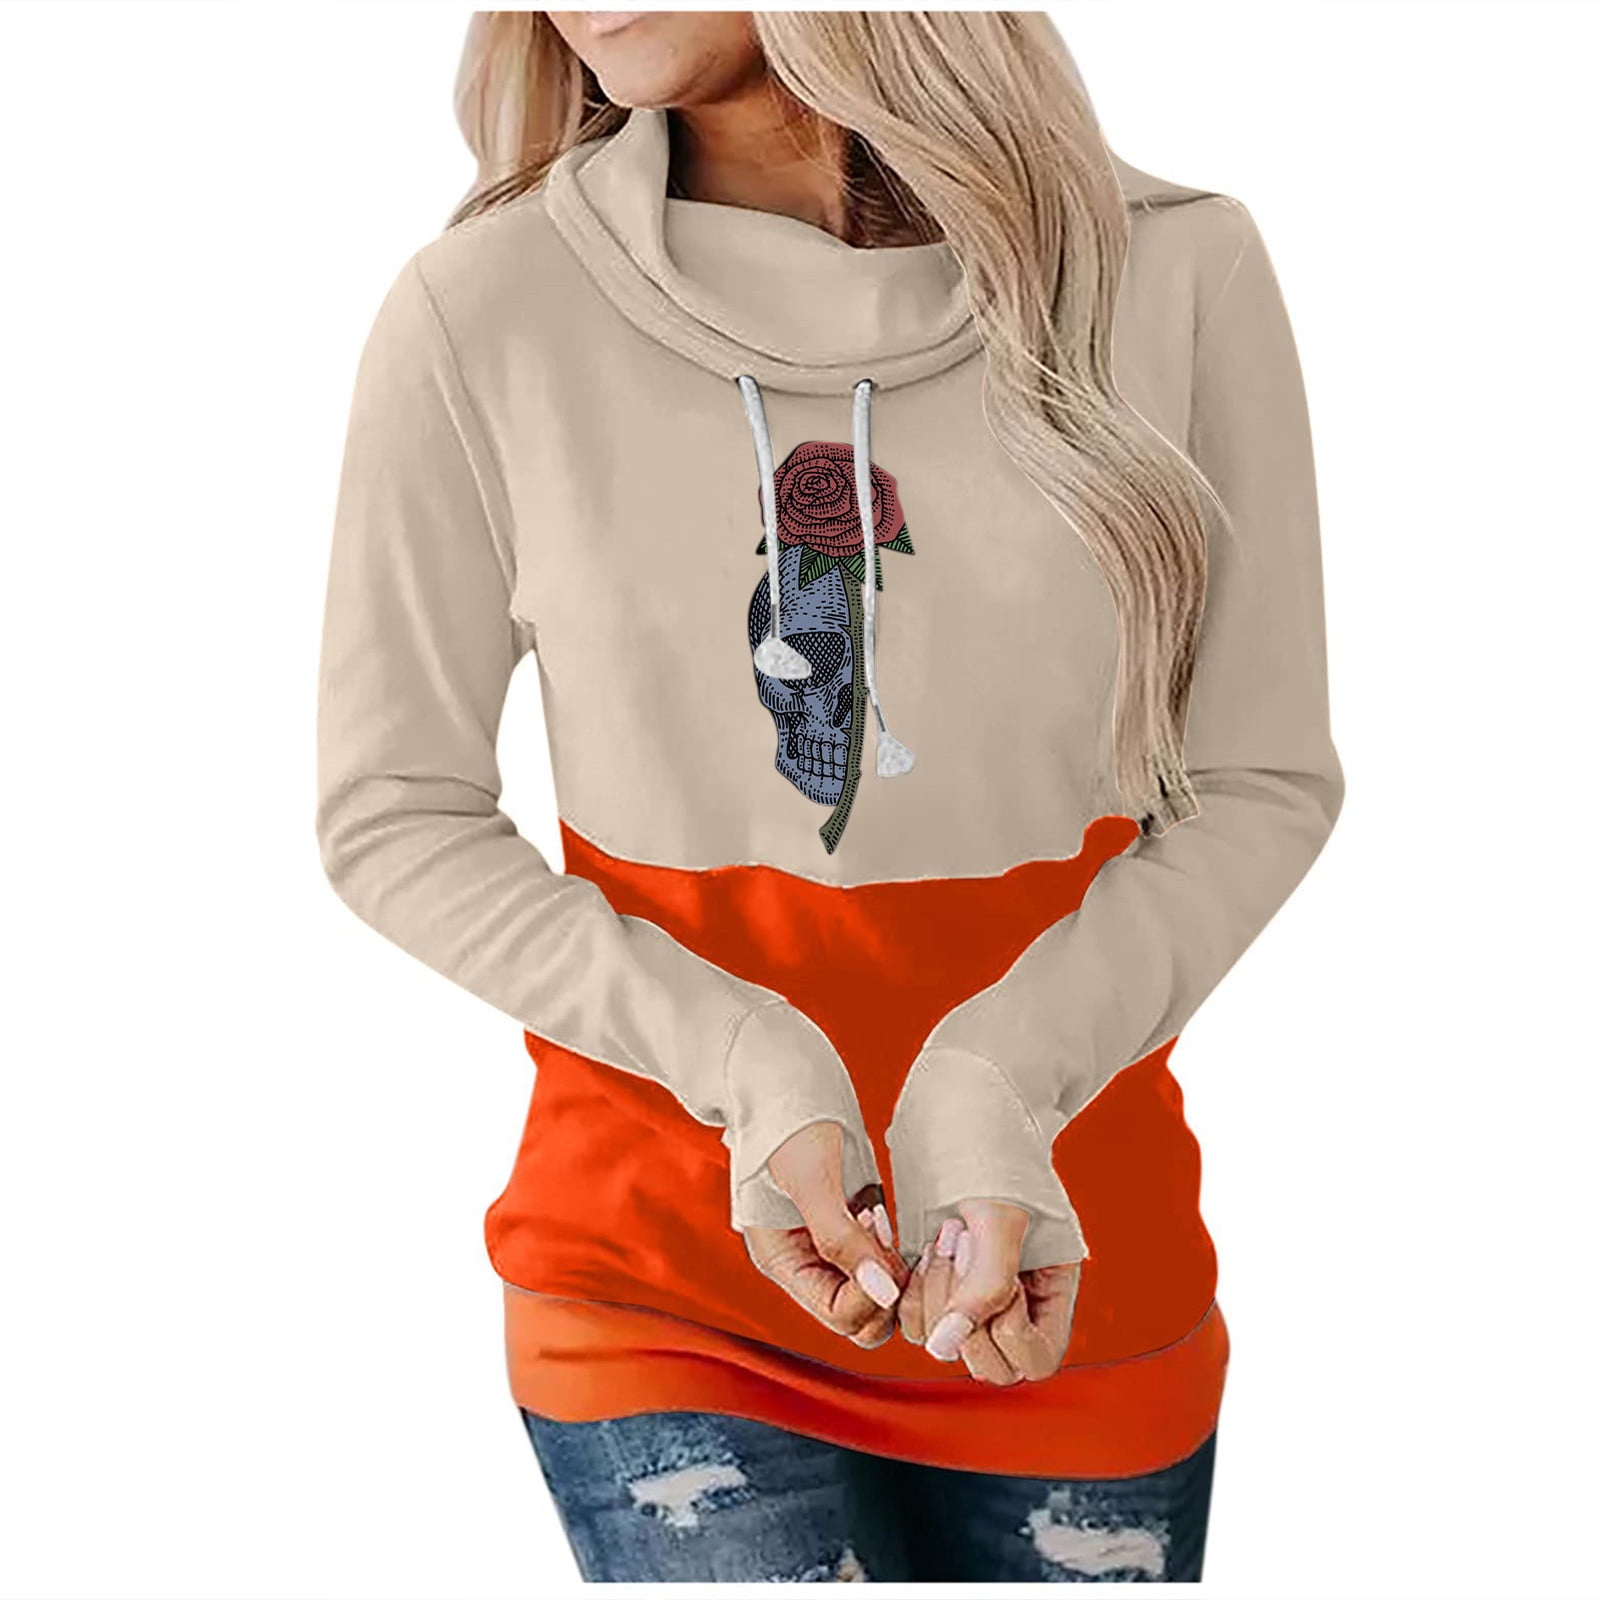 Meikosks Cute Graphic Hoodie Womens Drawstring Sweatshirts Long Sleeve Pocket Pullover Casual Tops 